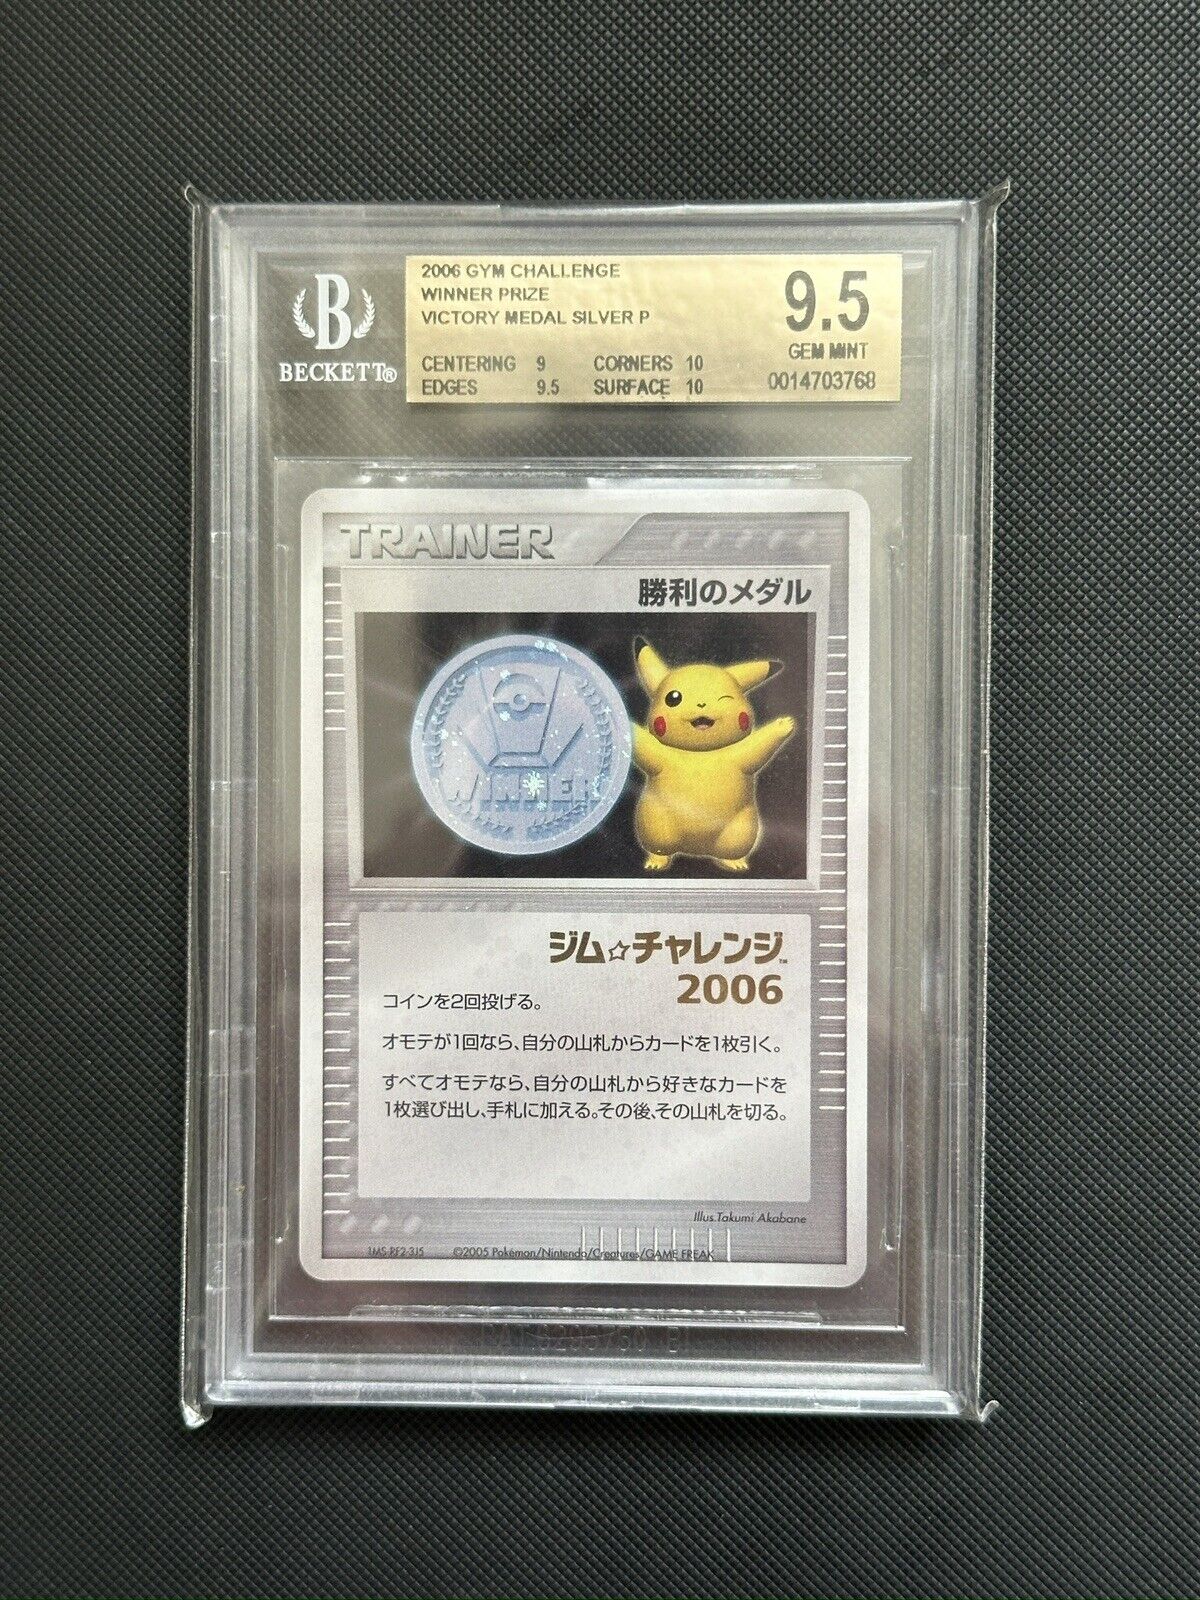 2006 Japanese Pokemon BGS 9.5 Pikachu GYM Challenge Medal Silver Stamp 14703768